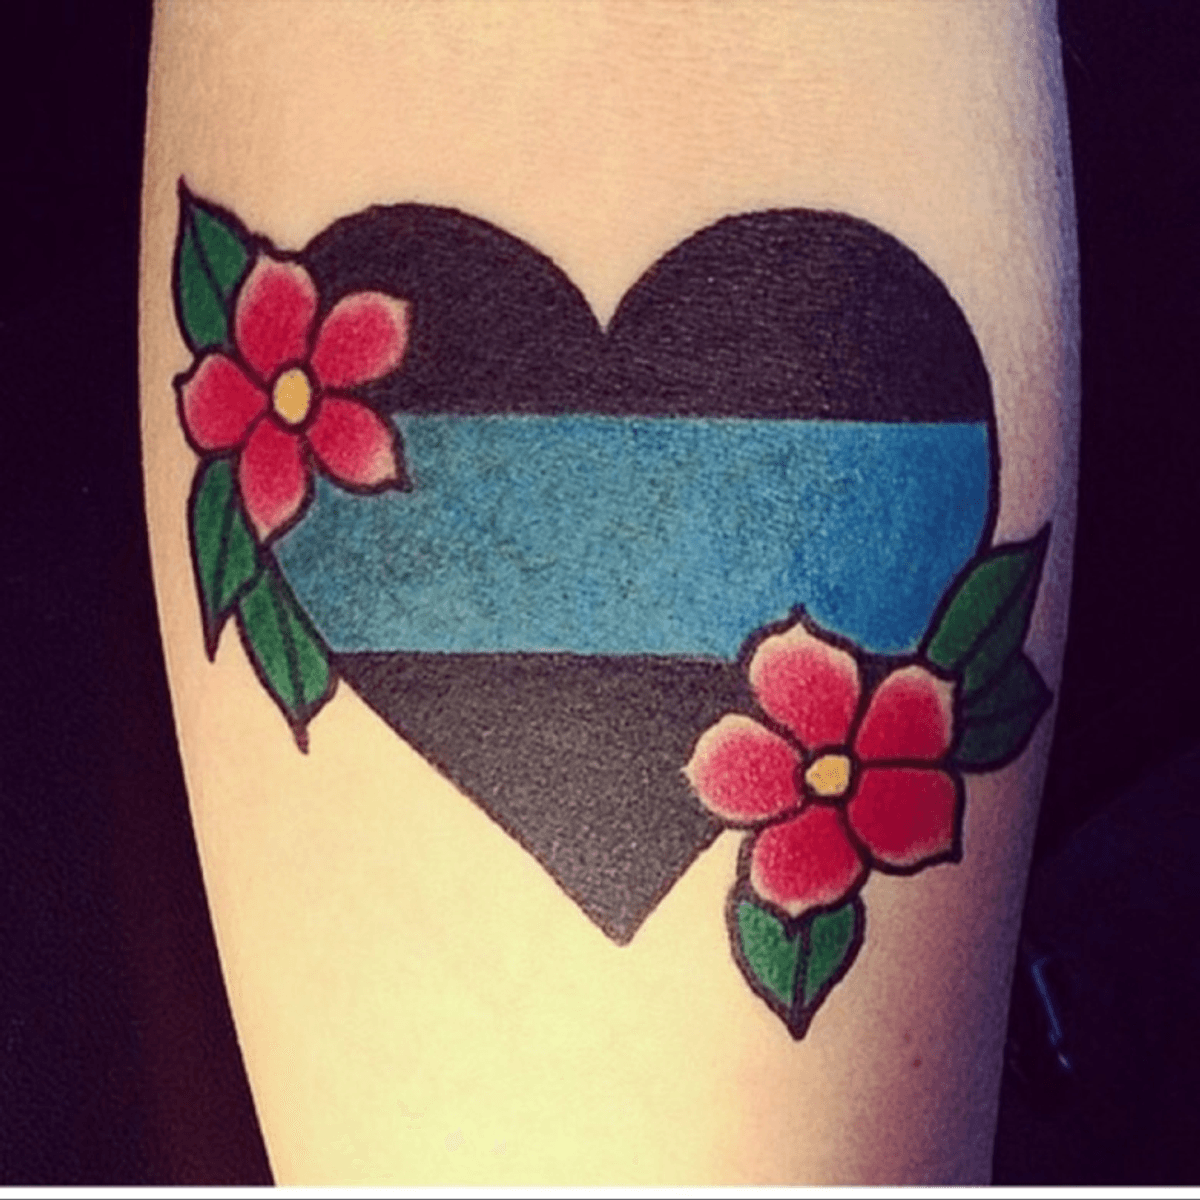 Tattoo uploaded by HauntedNix • Law Enforcement support tattoo- Thin Blue  Line #thinblueline #lawenforcementtattoo #bluelivesmatter #traditional  #hearttattoo • Tattoodo